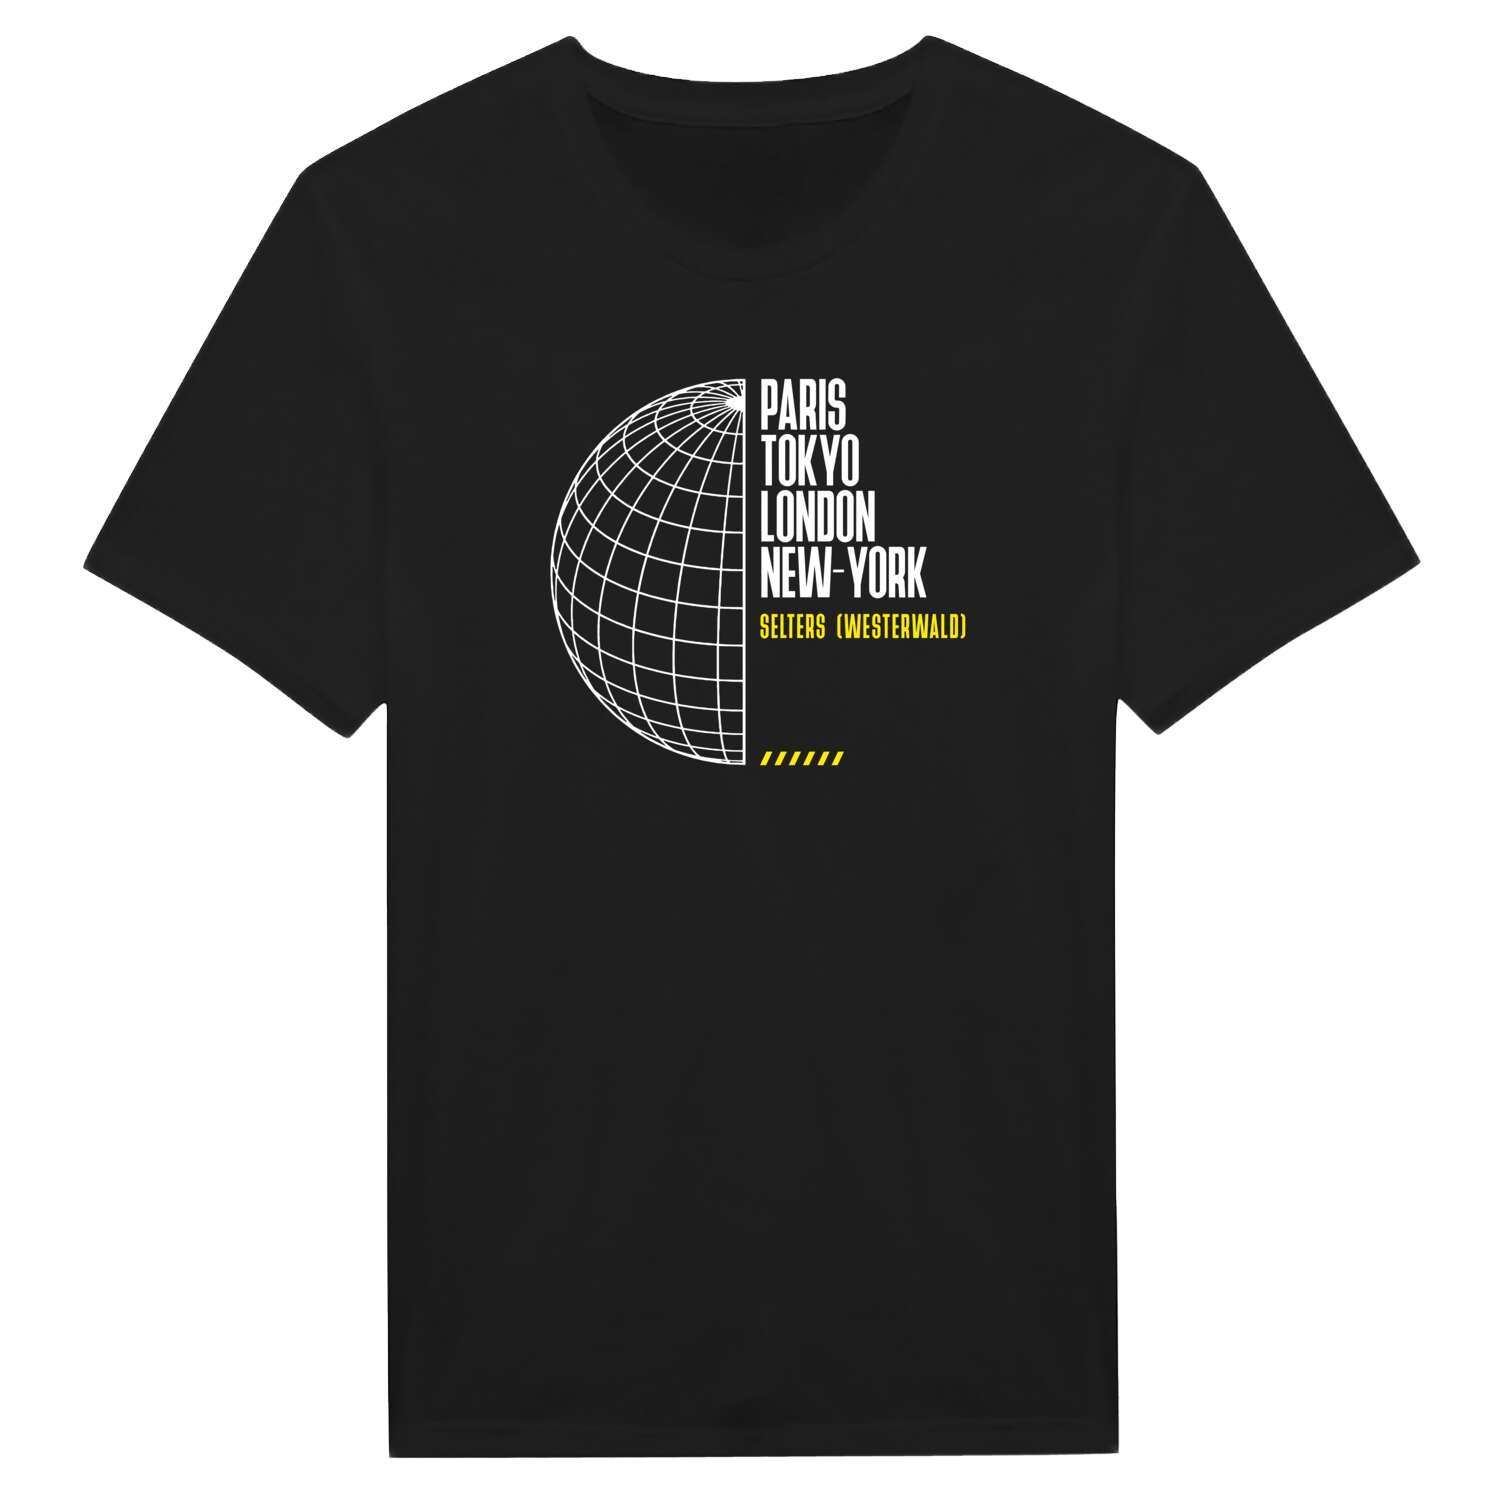 Selters (Westerwald) T-Shirt »Paris Tokyo London«